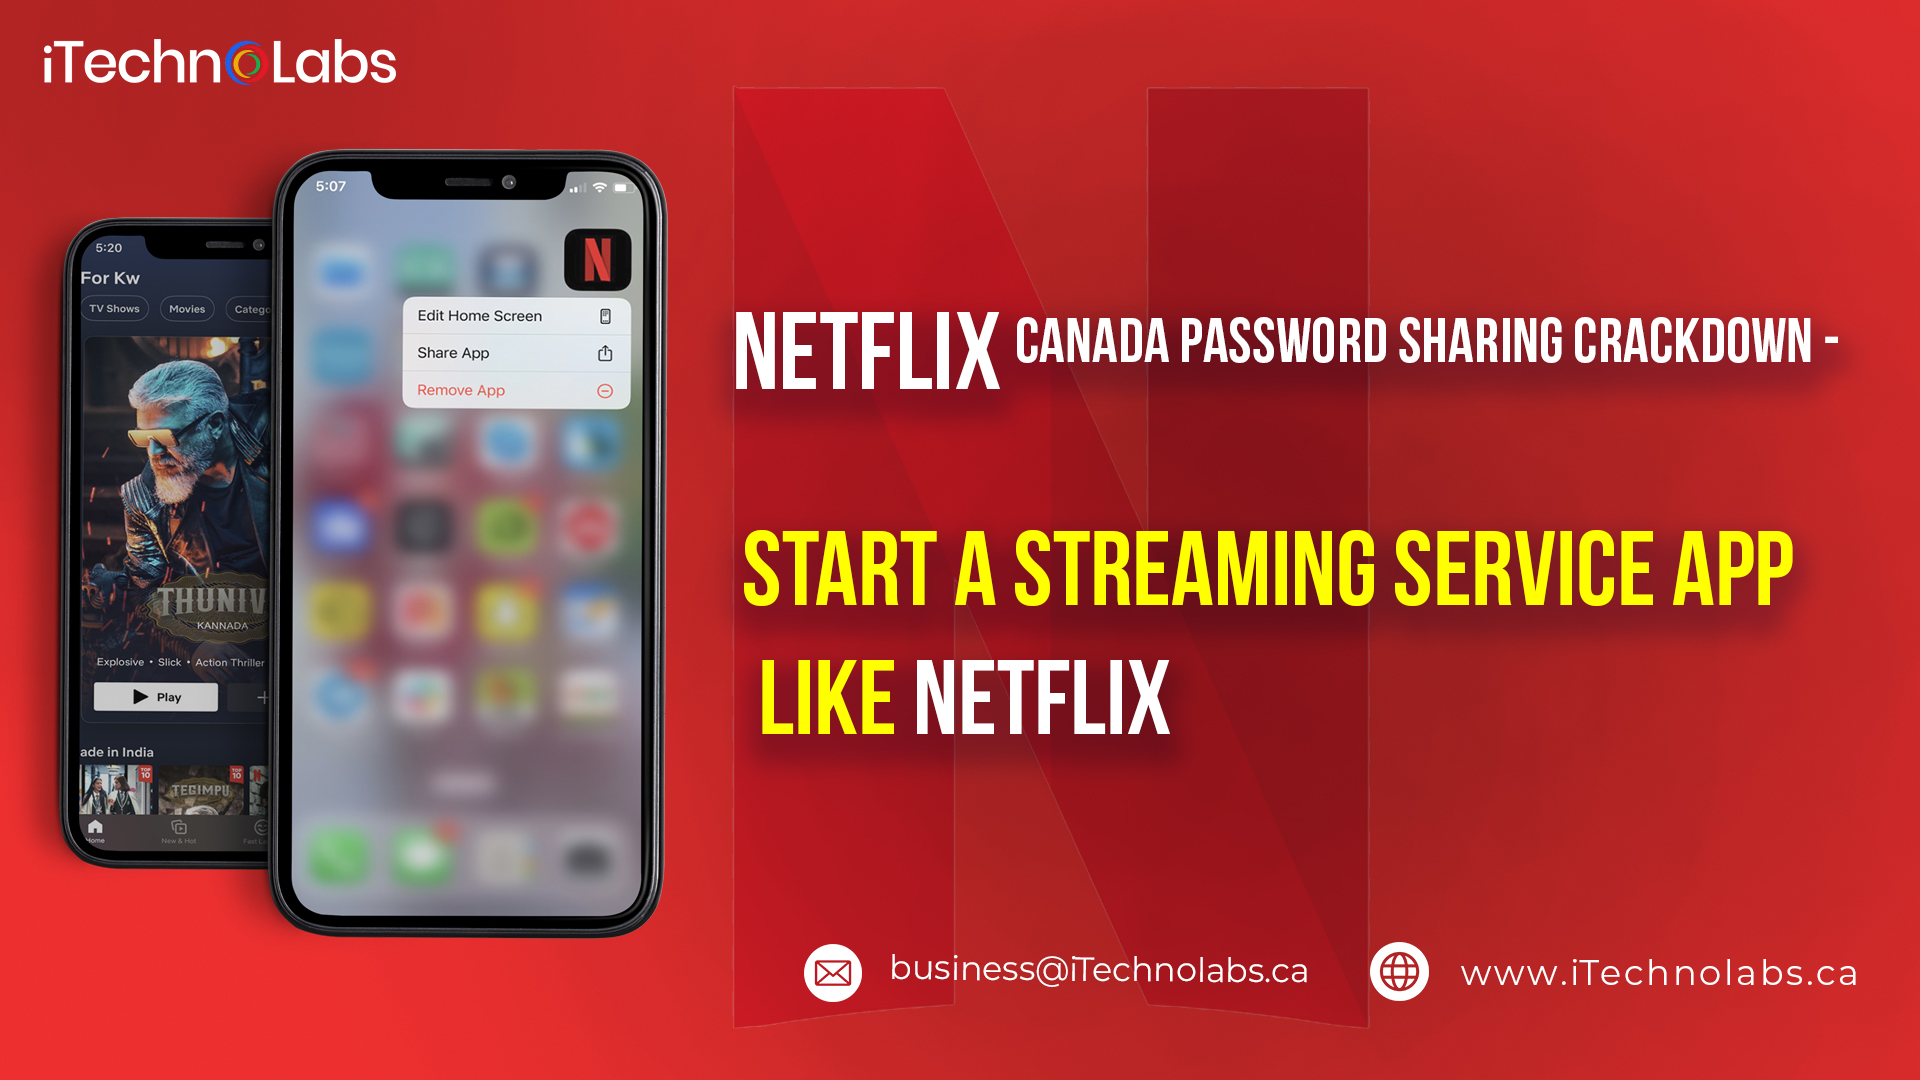 netflix canada password sharing crackdown - create a streaming app like netflix itechnolabs 